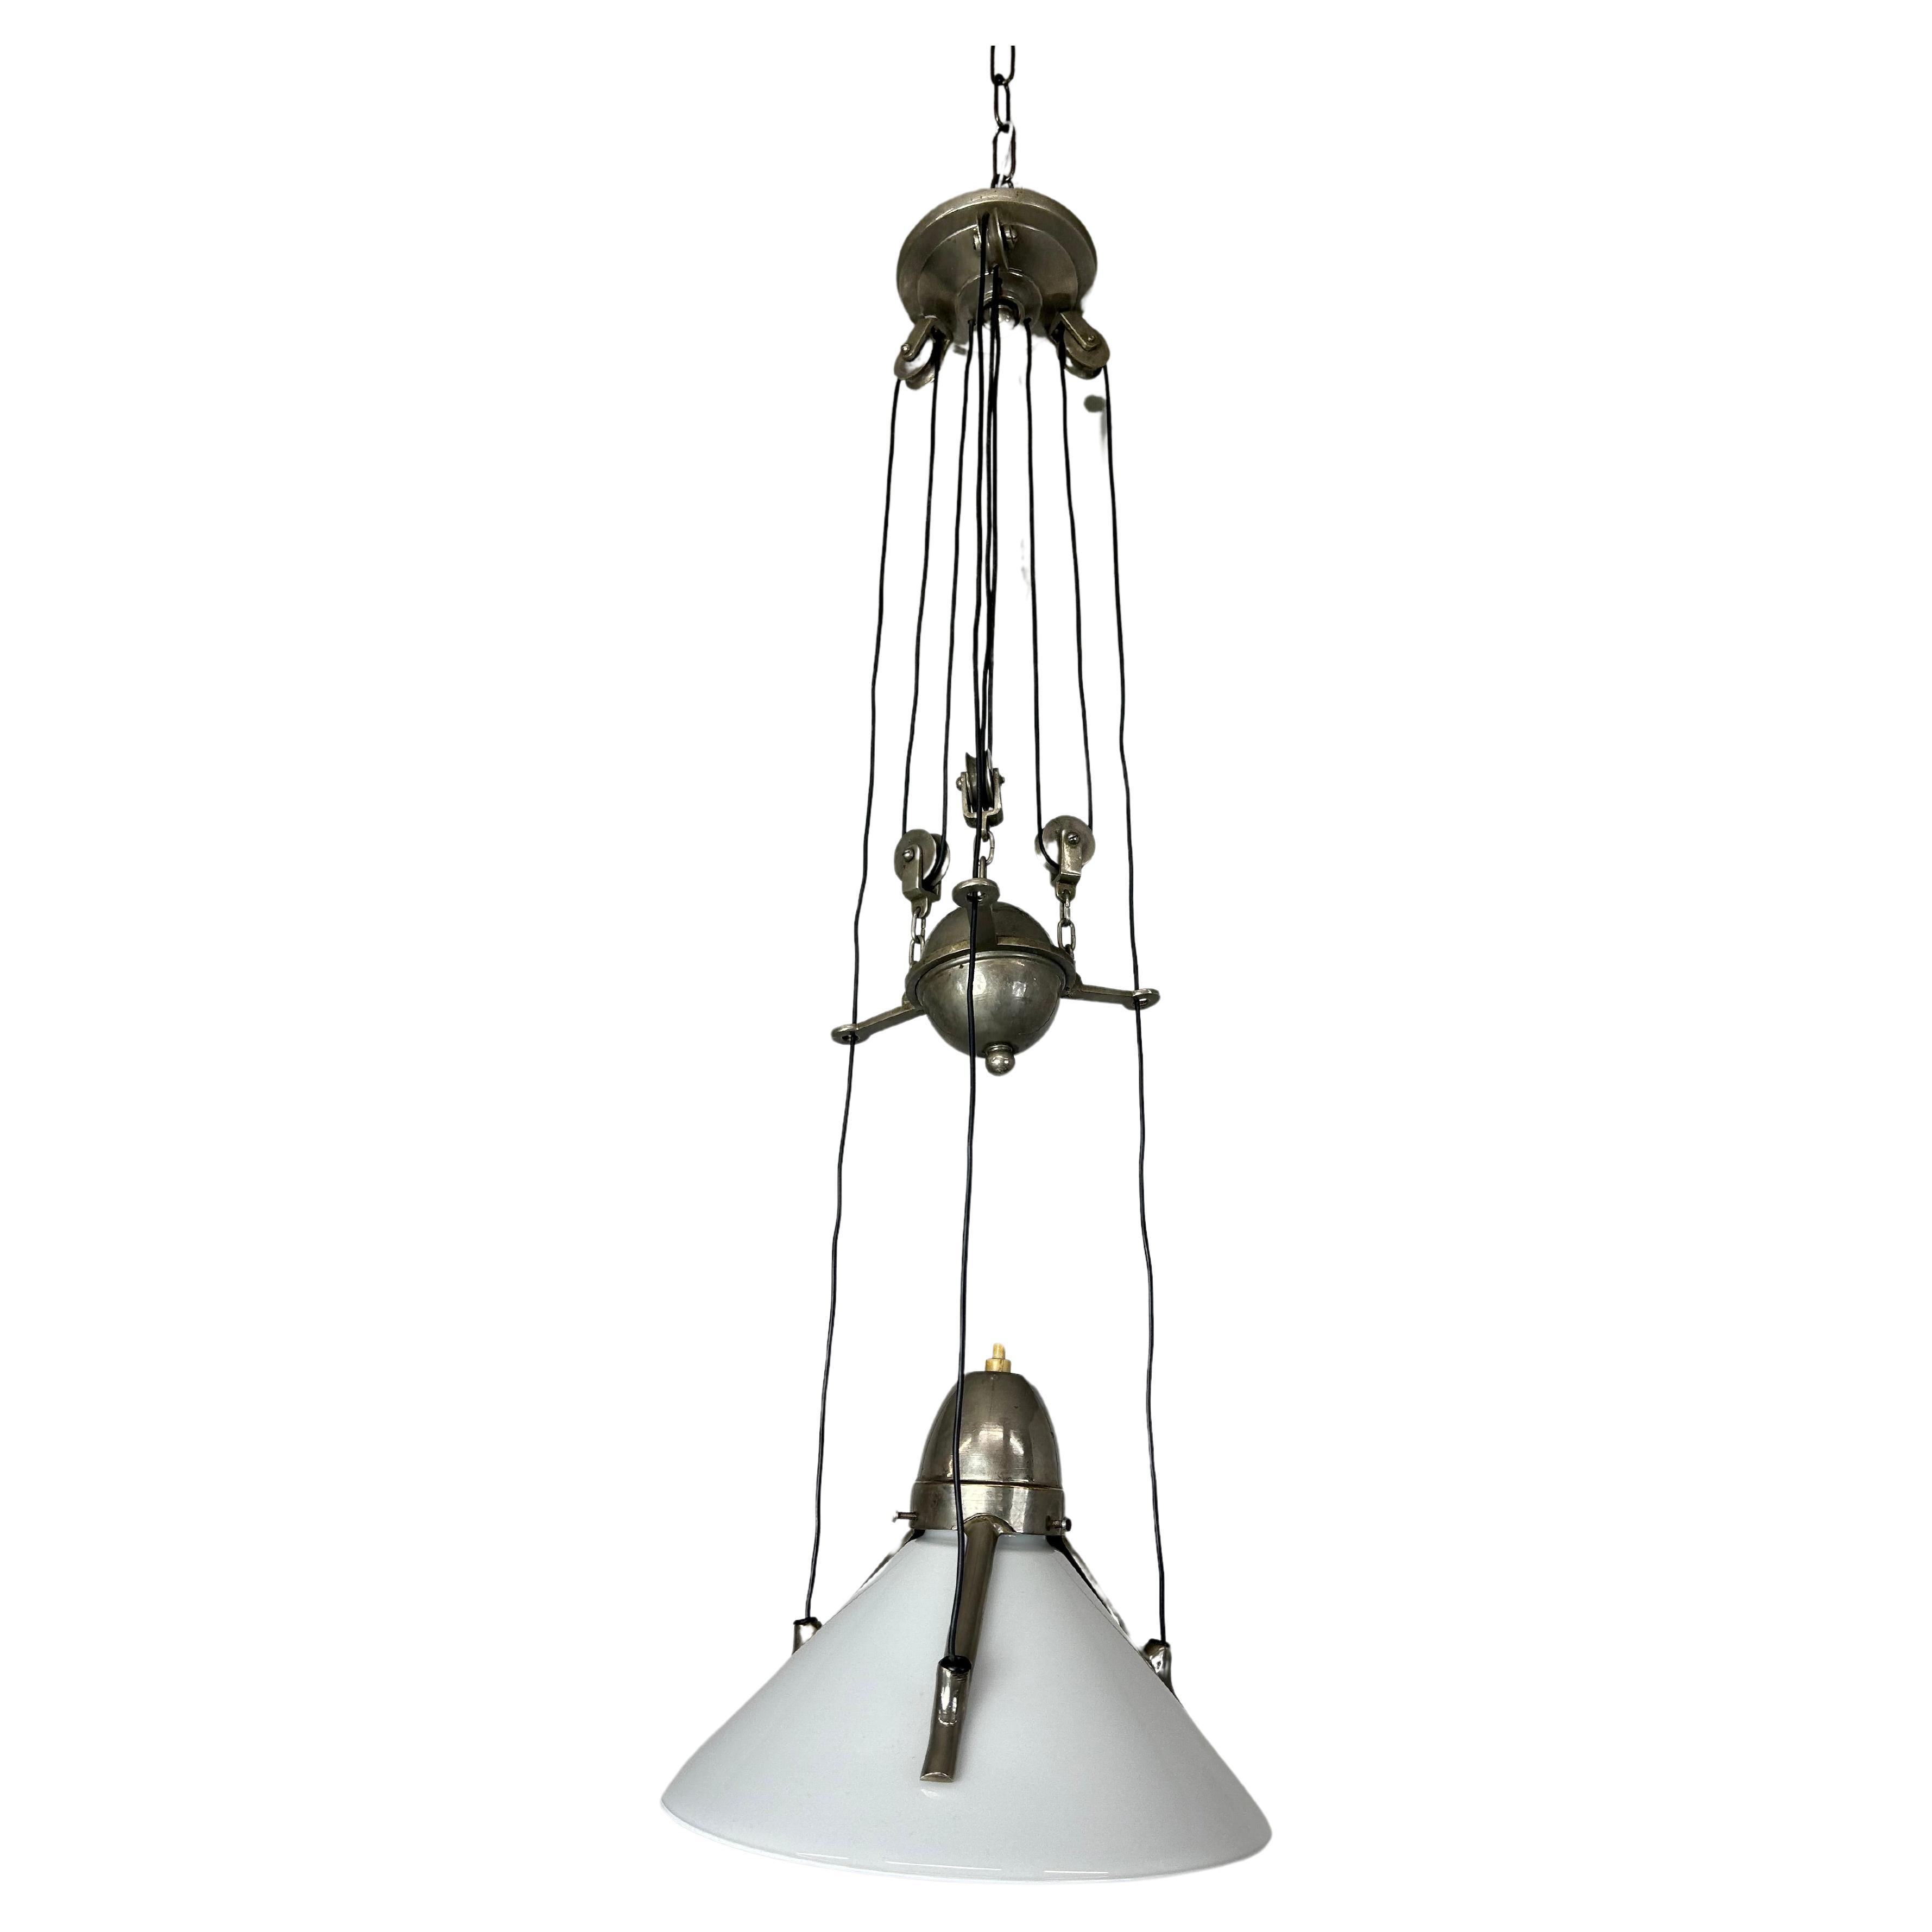 Art deco adjustable hanging lamp For Sale